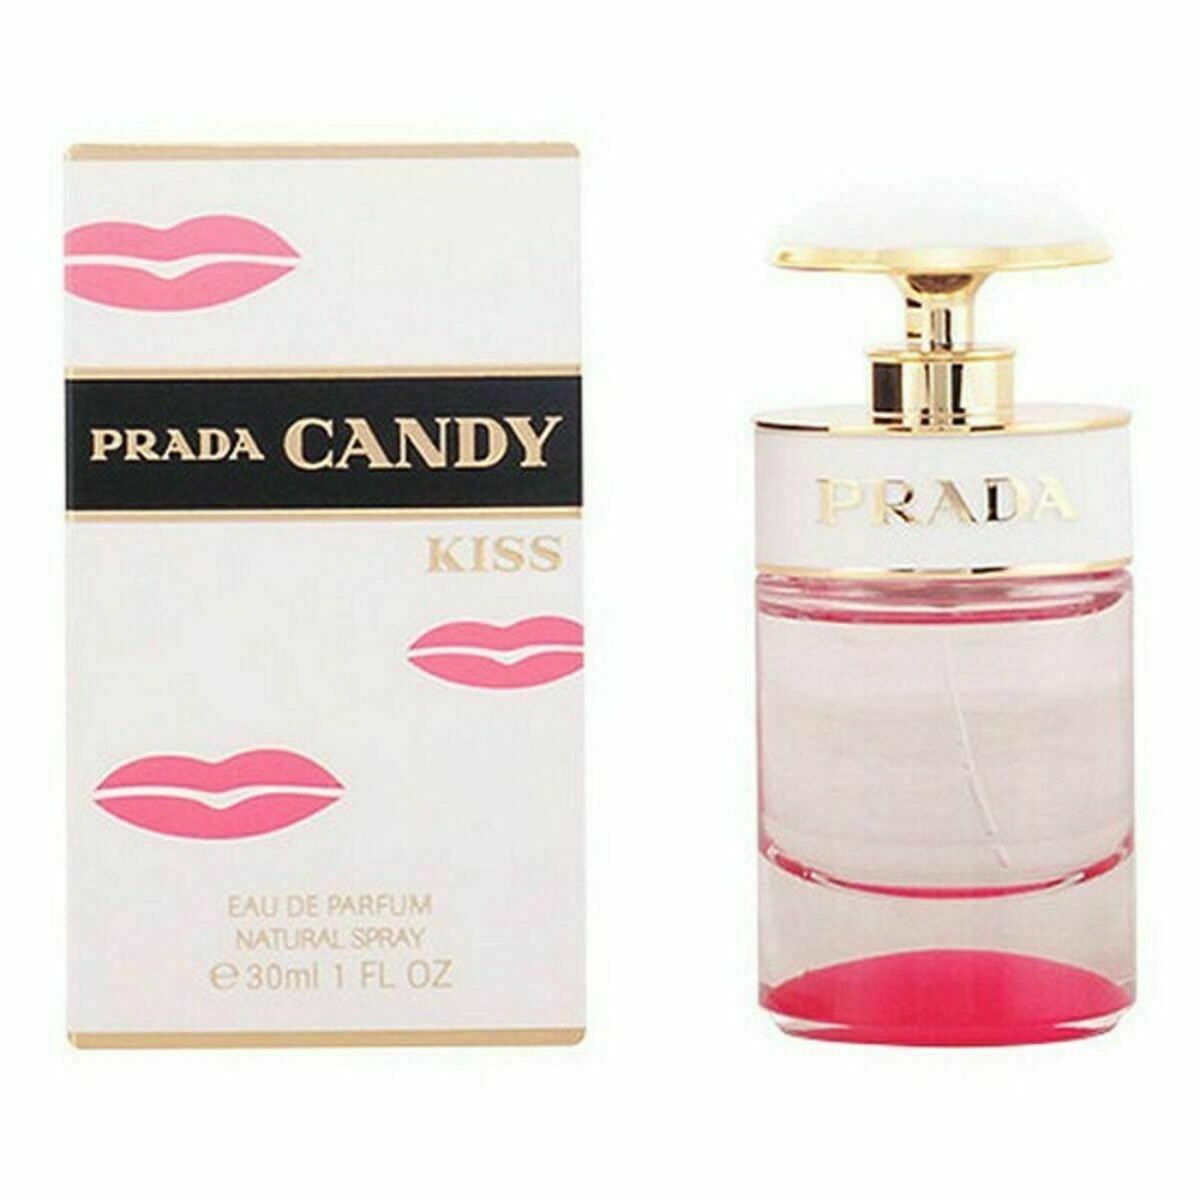 Damesparfum Prada Candy Kiss EDP 80 ml